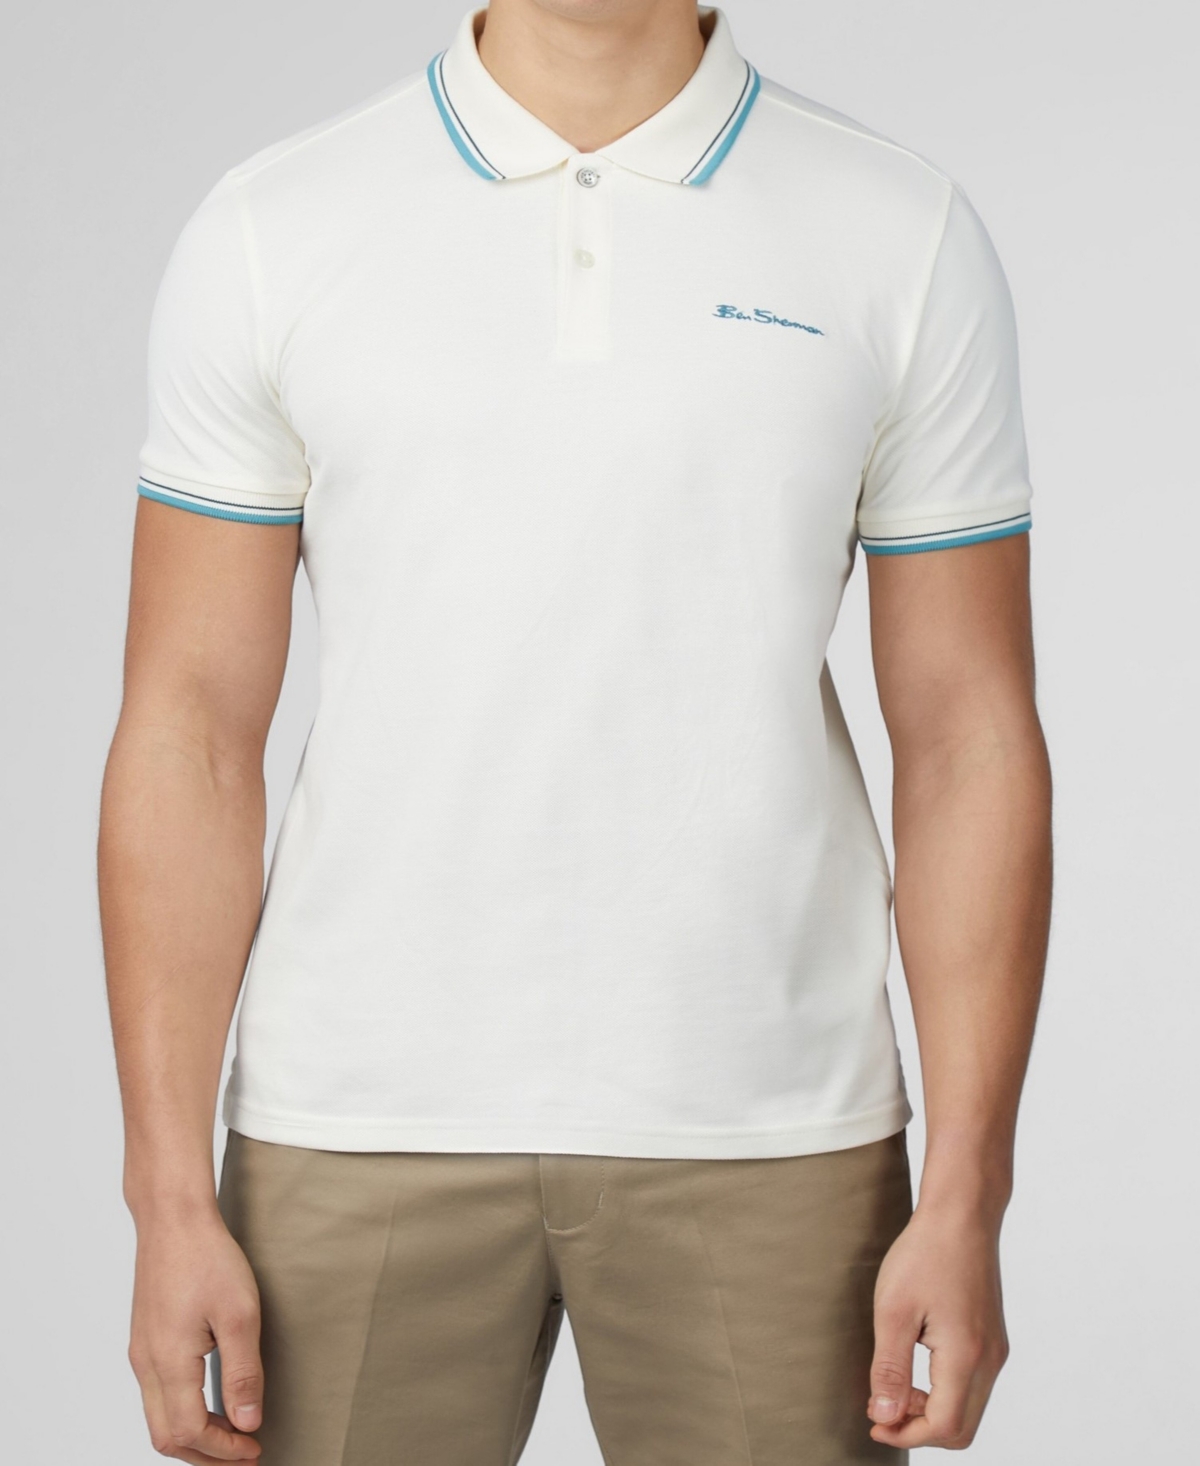 Men's Signature Short Sleeve Polo Shirt - Twilight